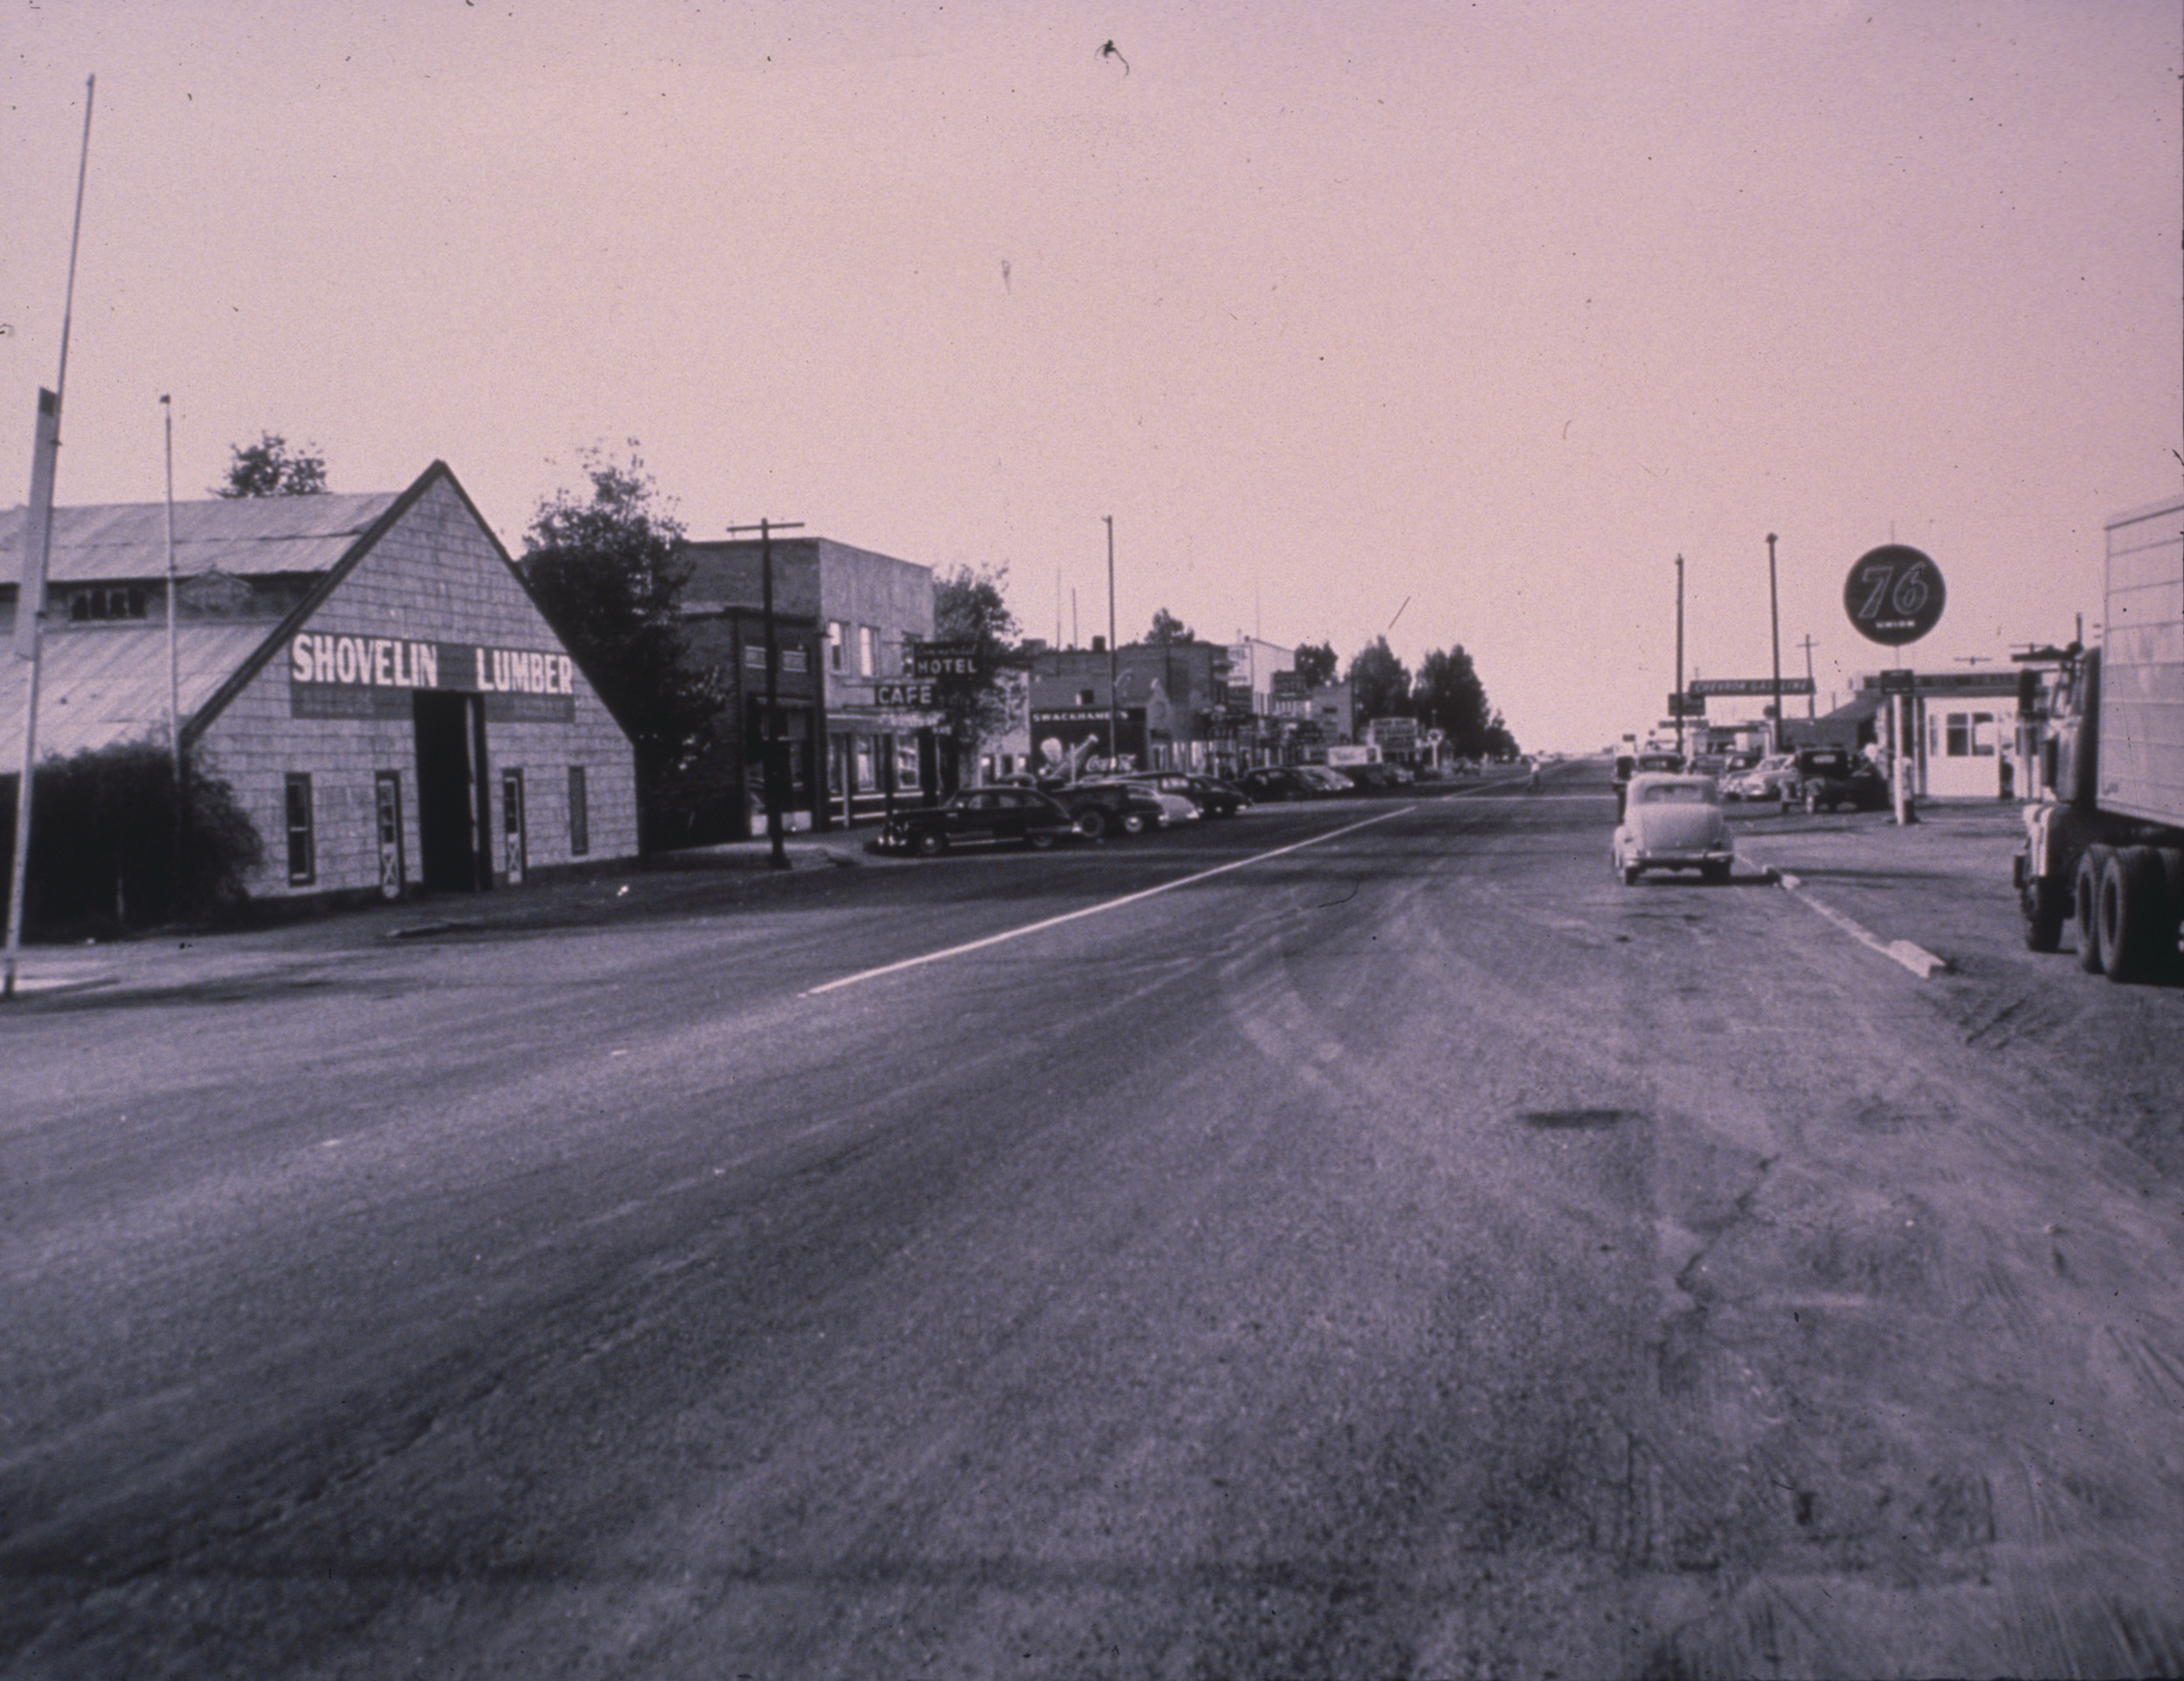 Slide of Main Street, Battle Mountain, Nevada, circa 1930s